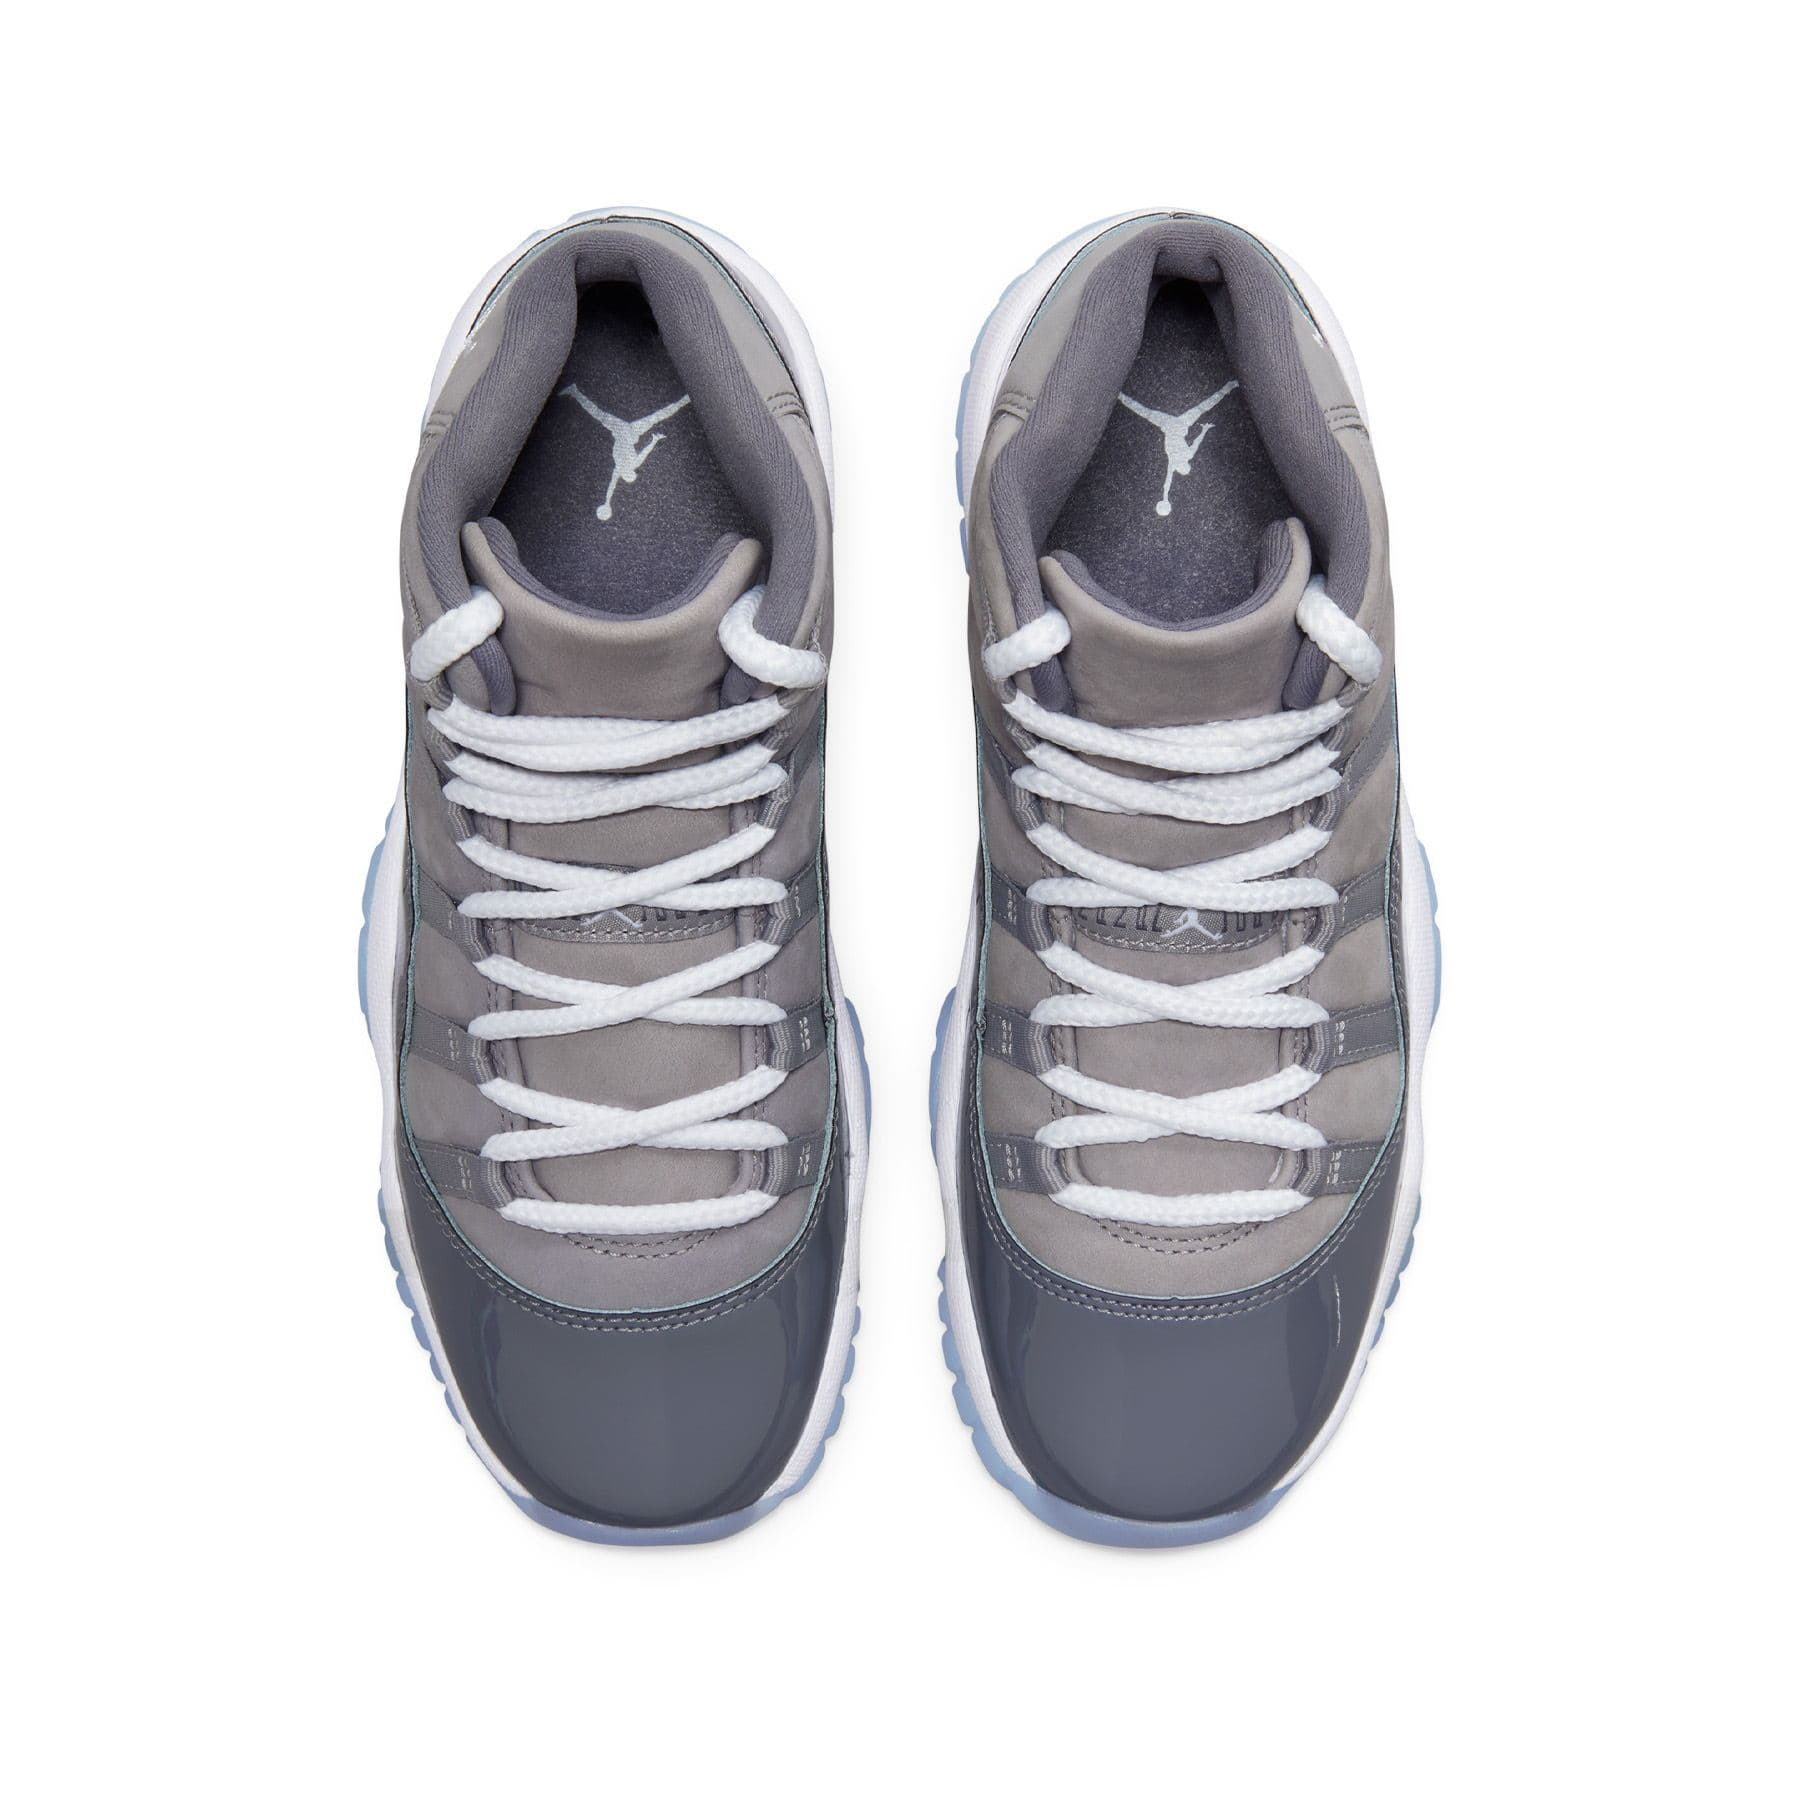 Double Boxed  249.99 Nike Air Jordan 11 Retro Cool Grey 2021 Double Boxed